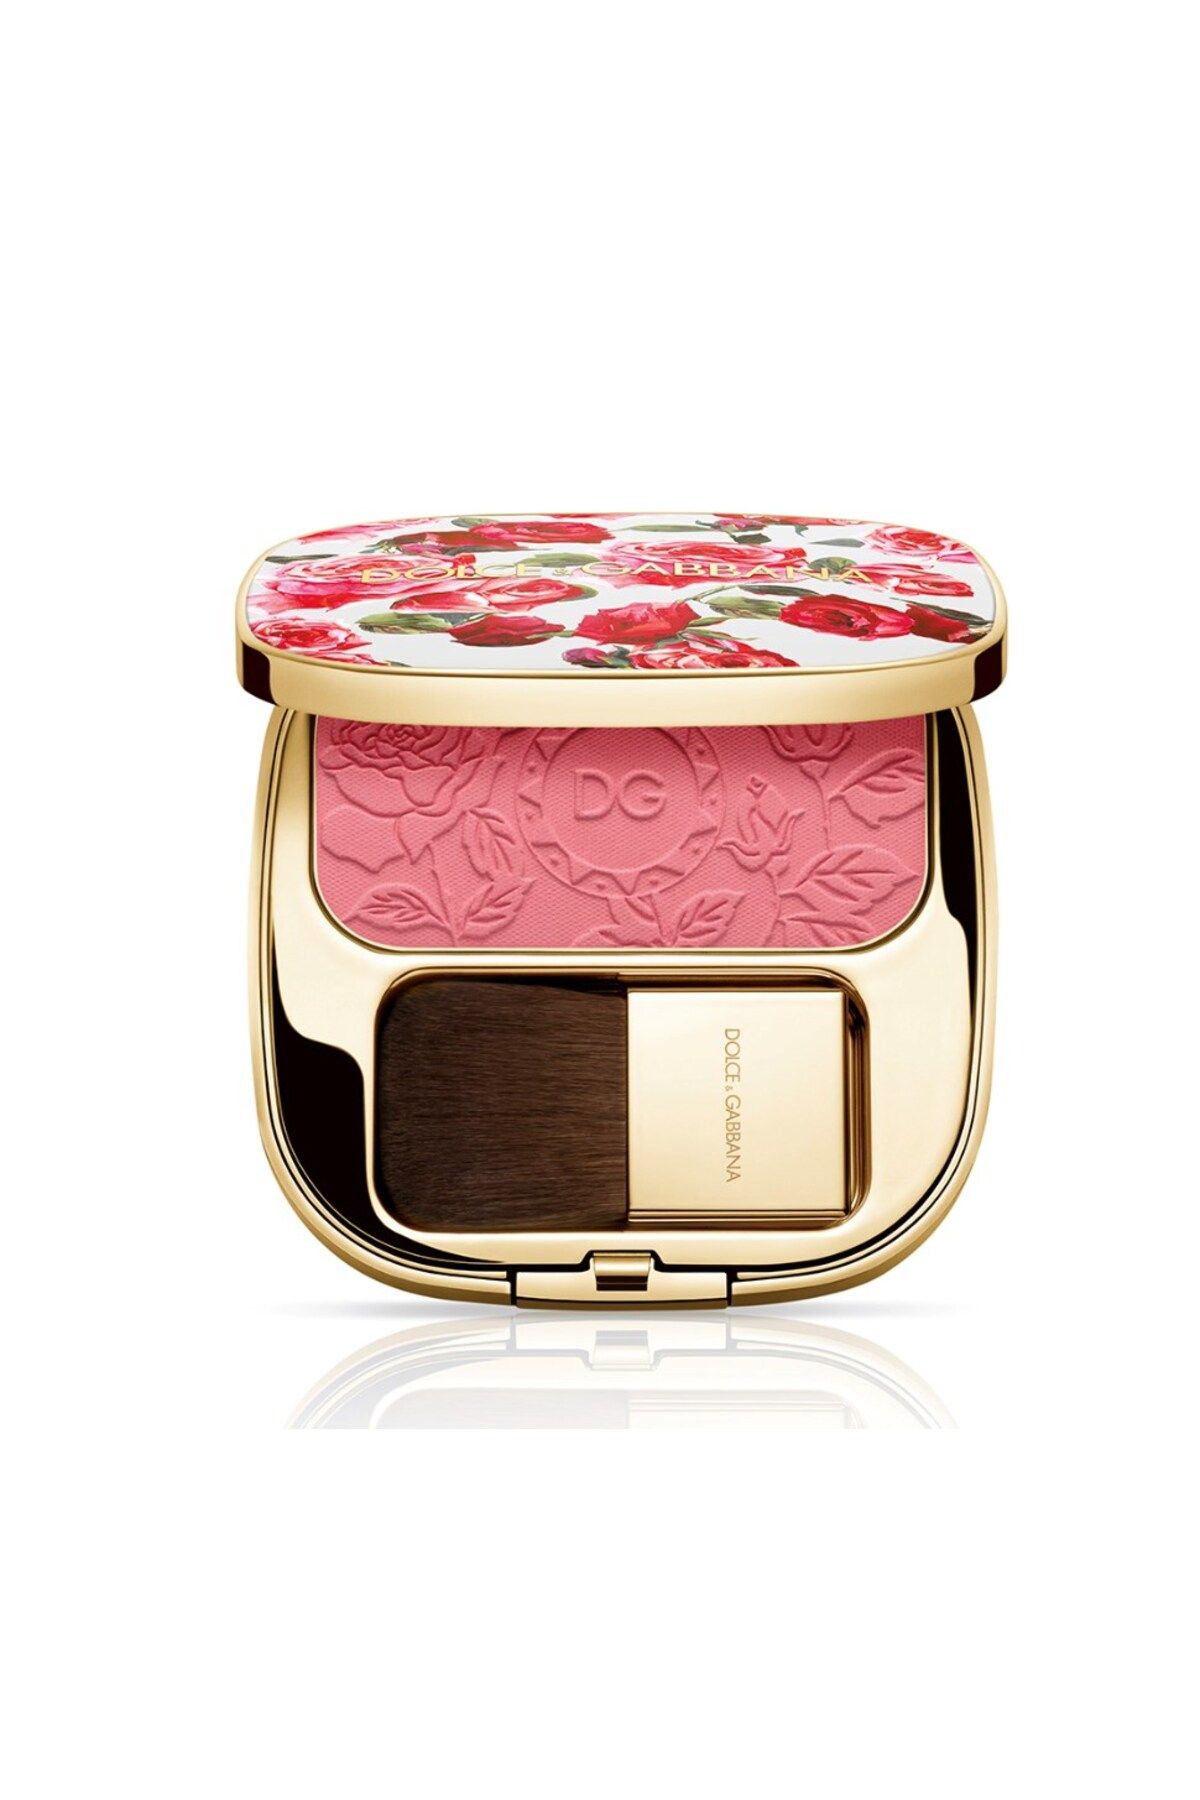 Dolce &Gabbana Blush Of Roses Powder Provocatıve 200 5G